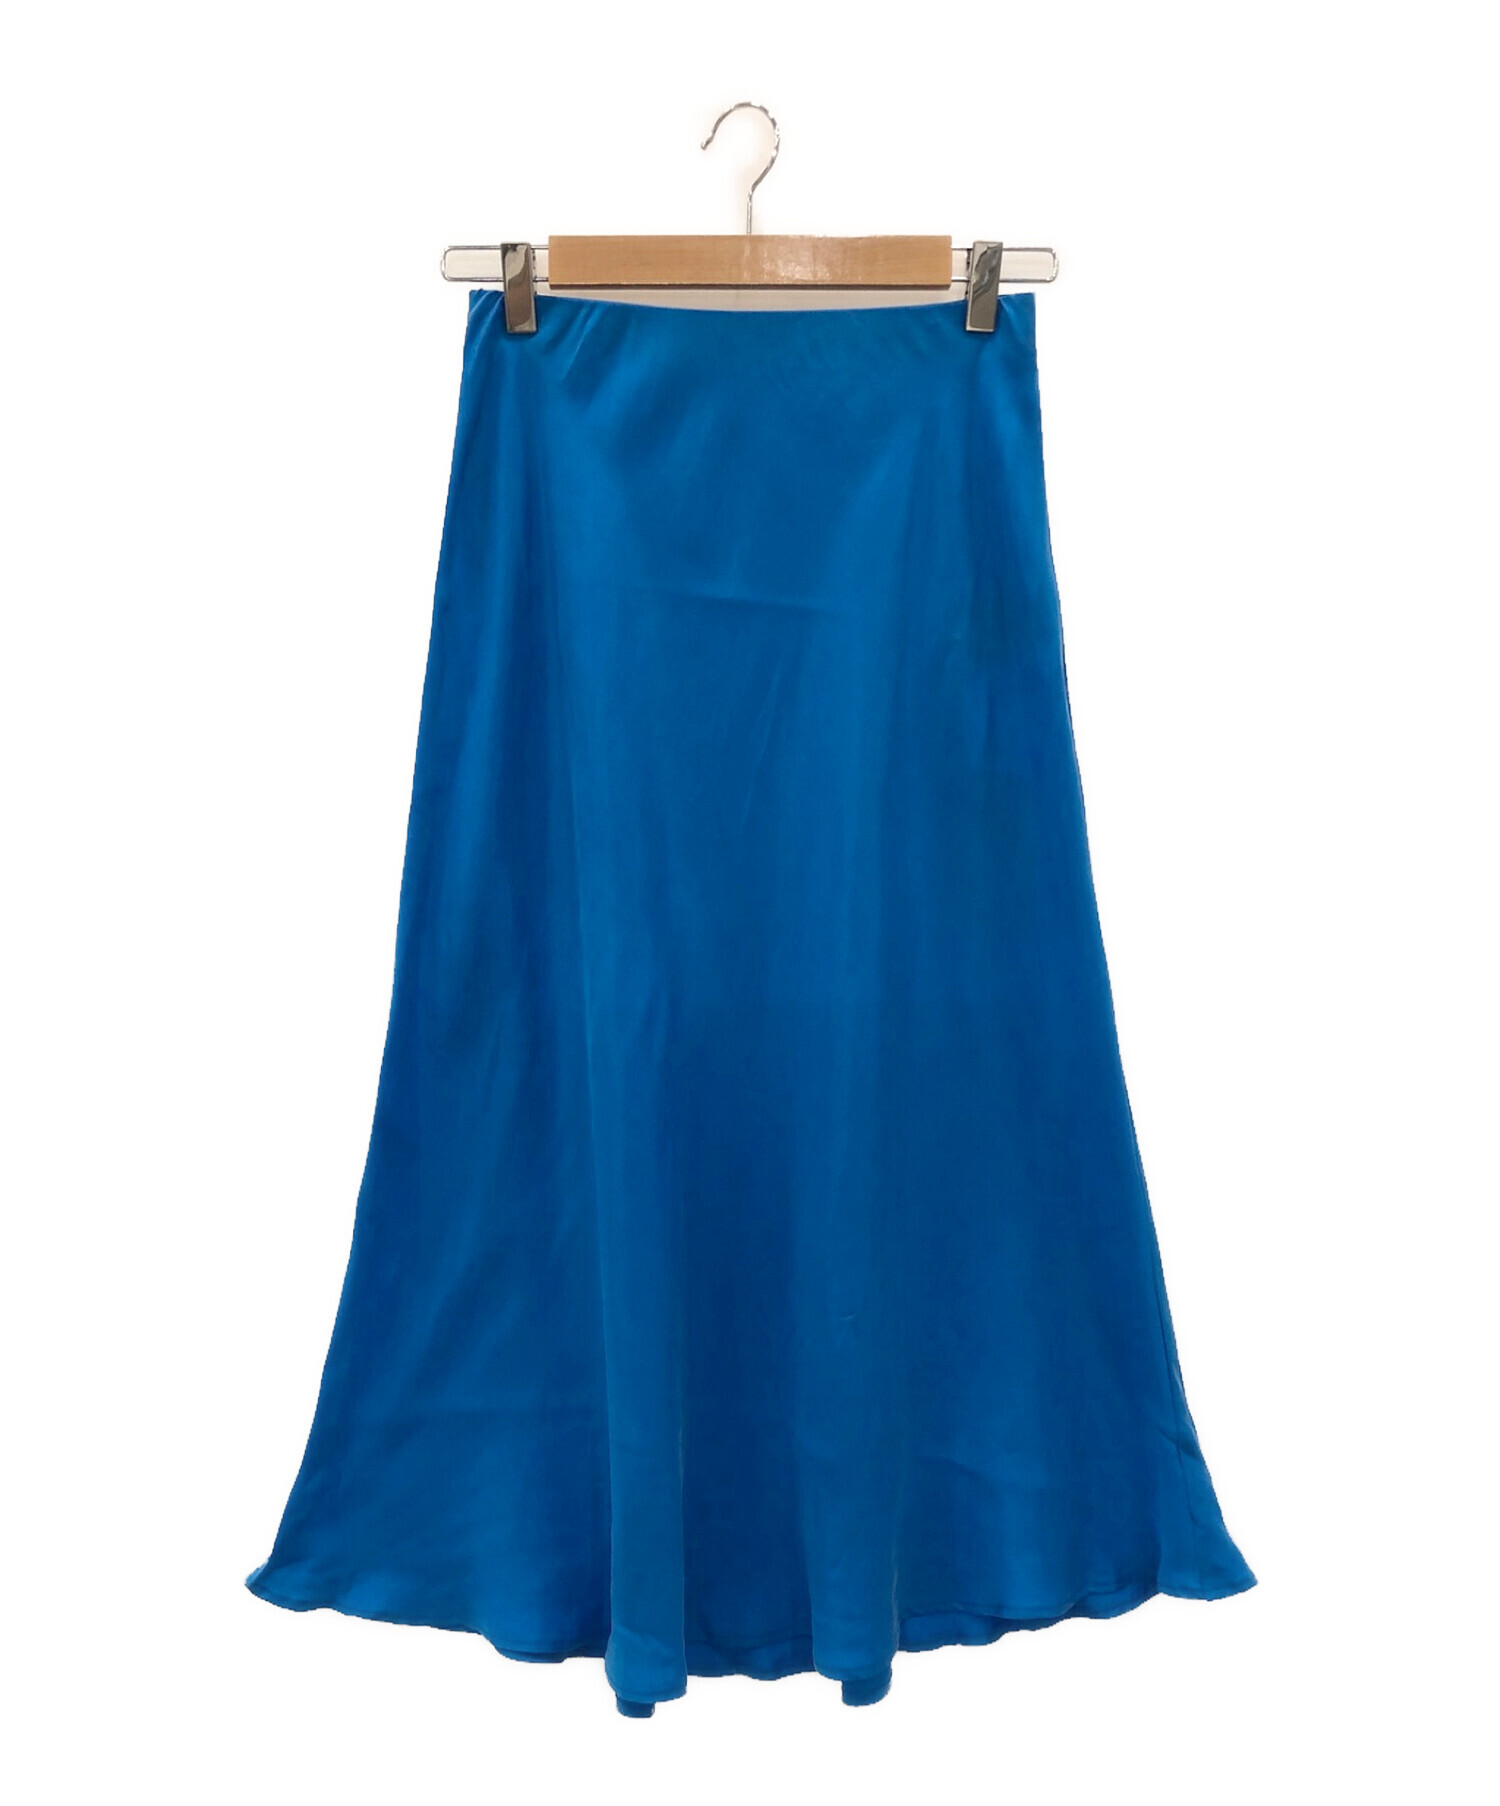 L'Appartement (アパルトモン) Feminity Skirt ブルー サイズ:34